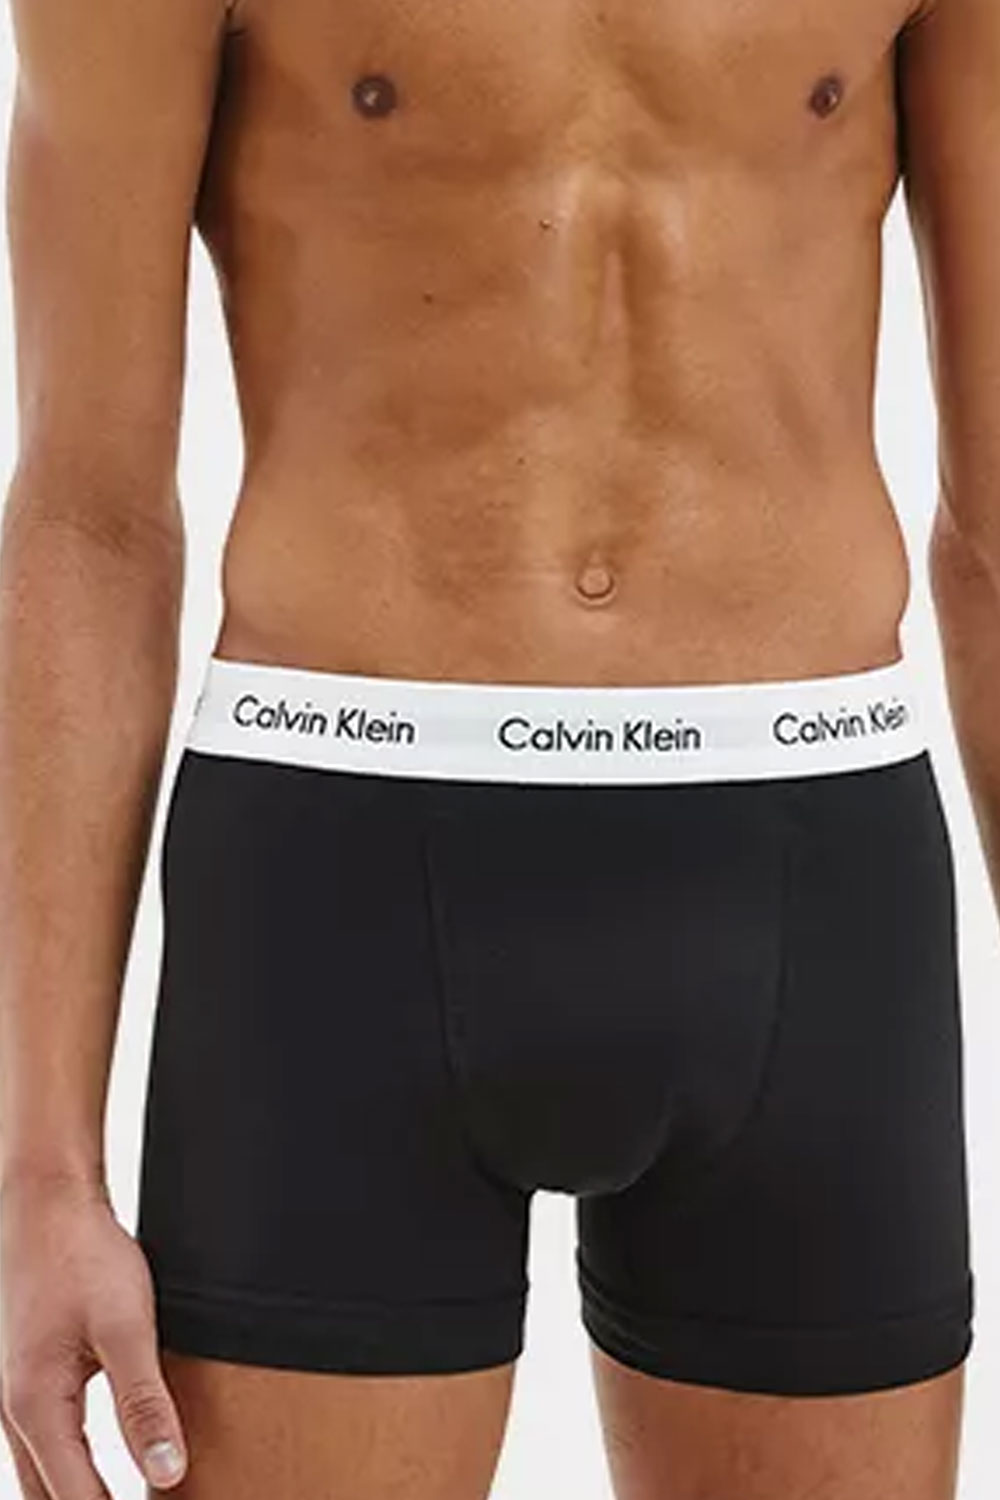 Calvin Klein Boxershorts 3-pack zwart-wit